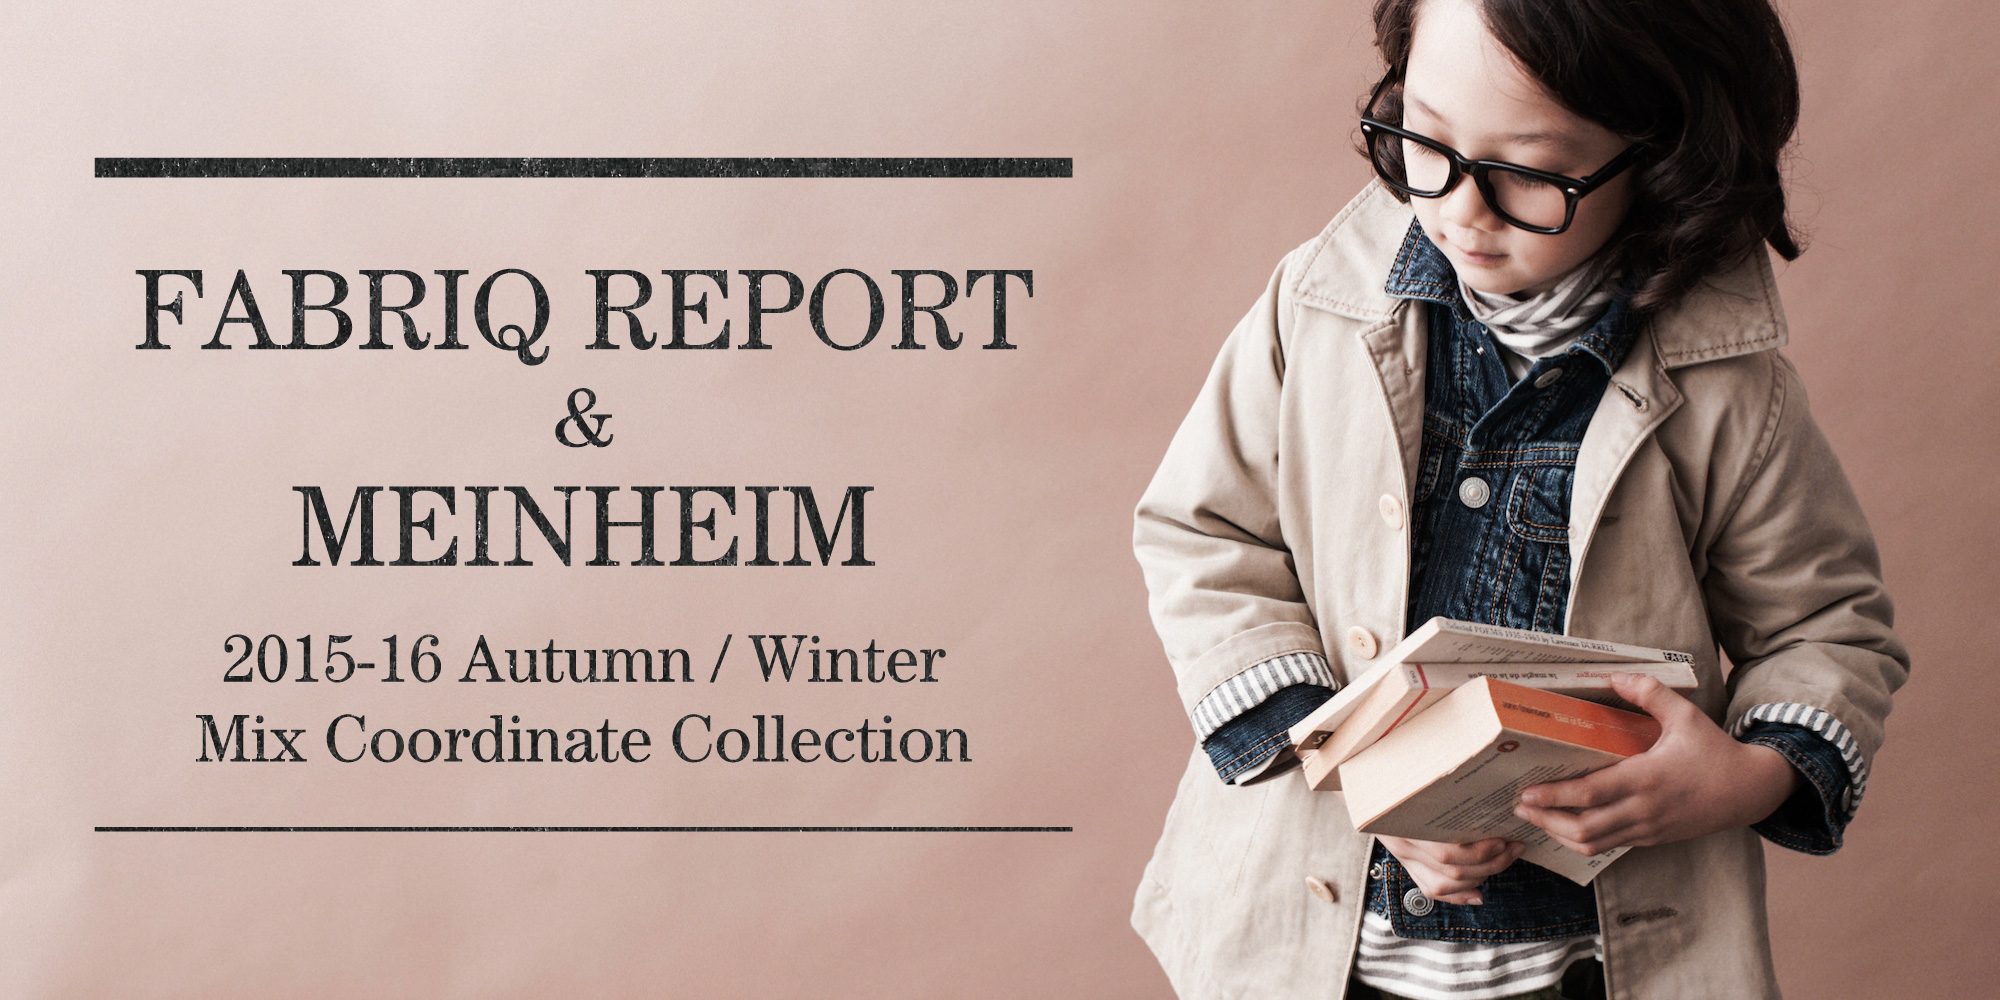 FABRIQ REPORT & MEINHEIM 2015-16 Autumn / Winter Collection